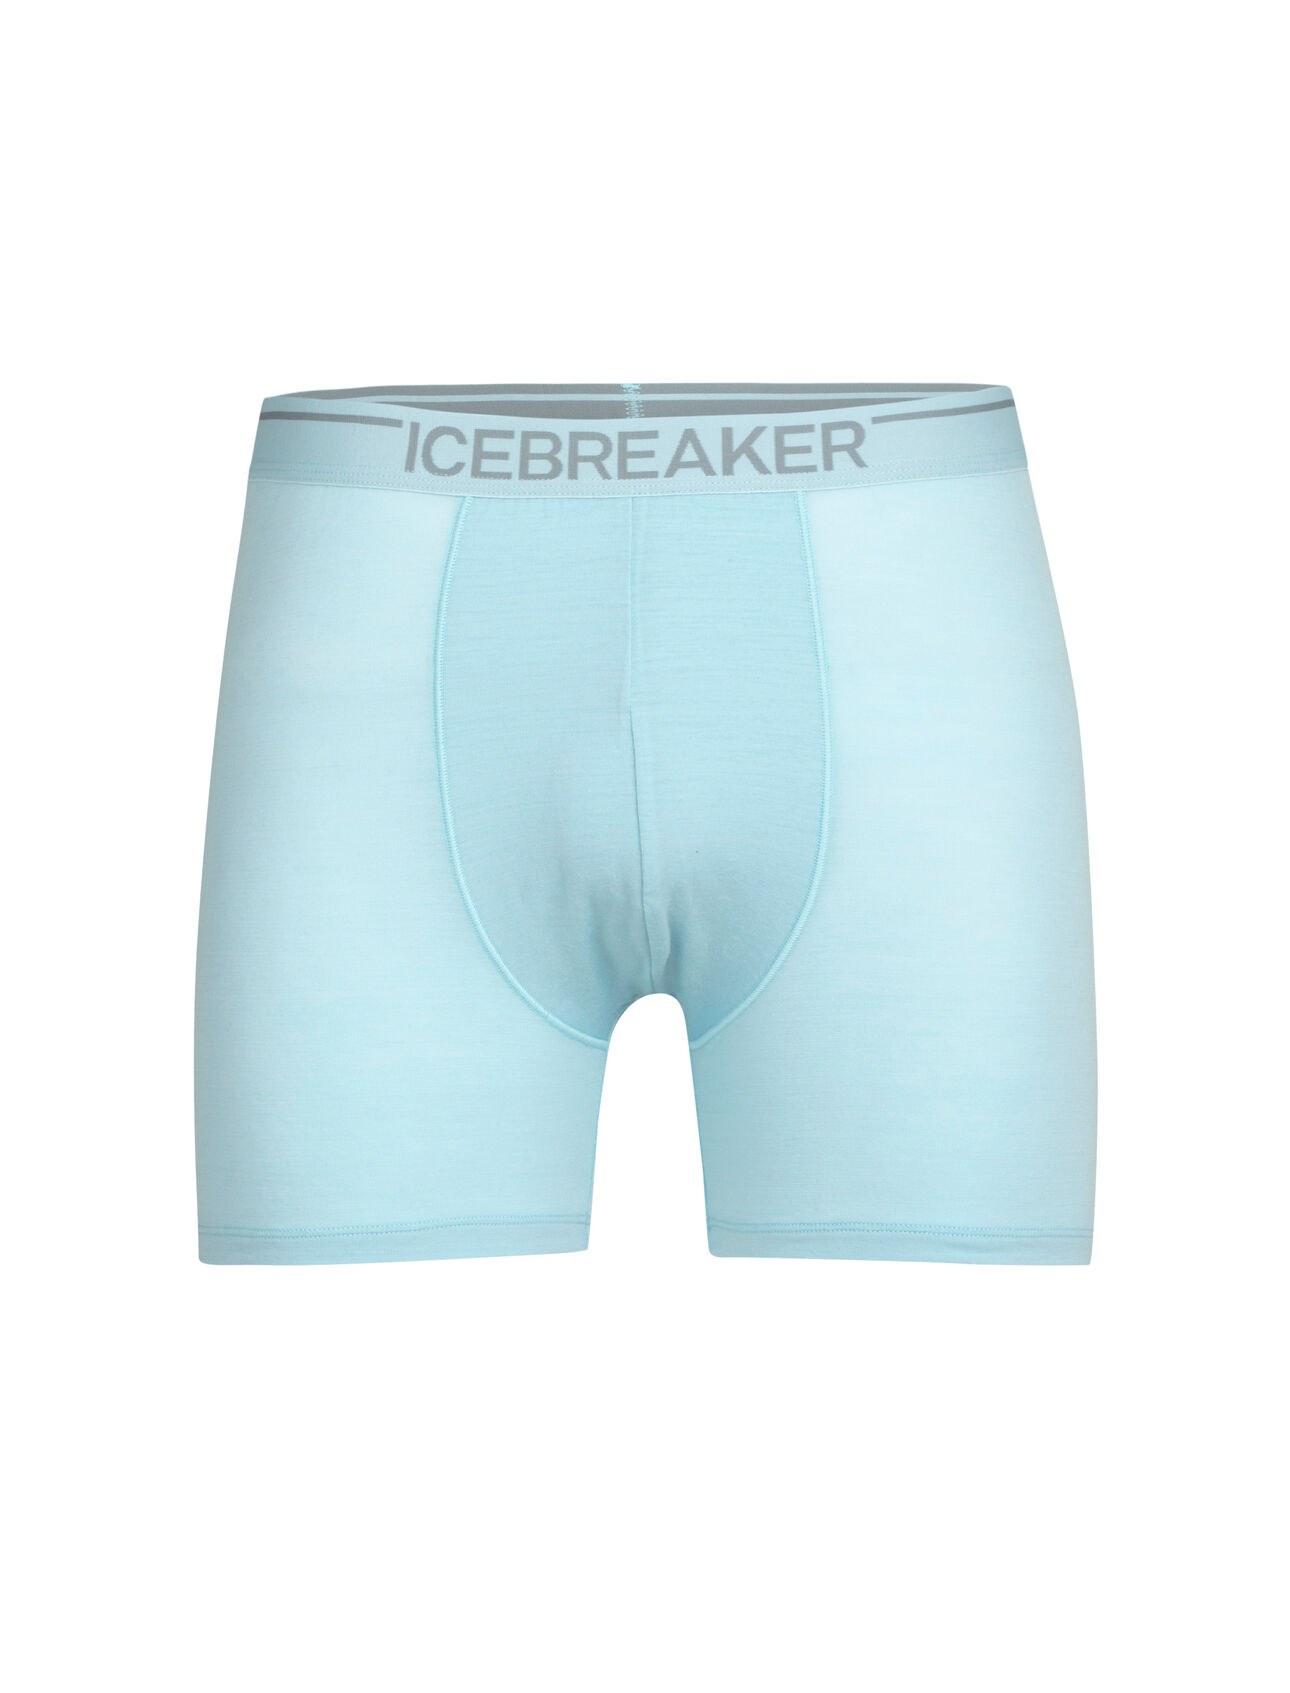 Large Icebreaker Mens Anatomica Merino Underwear-Black